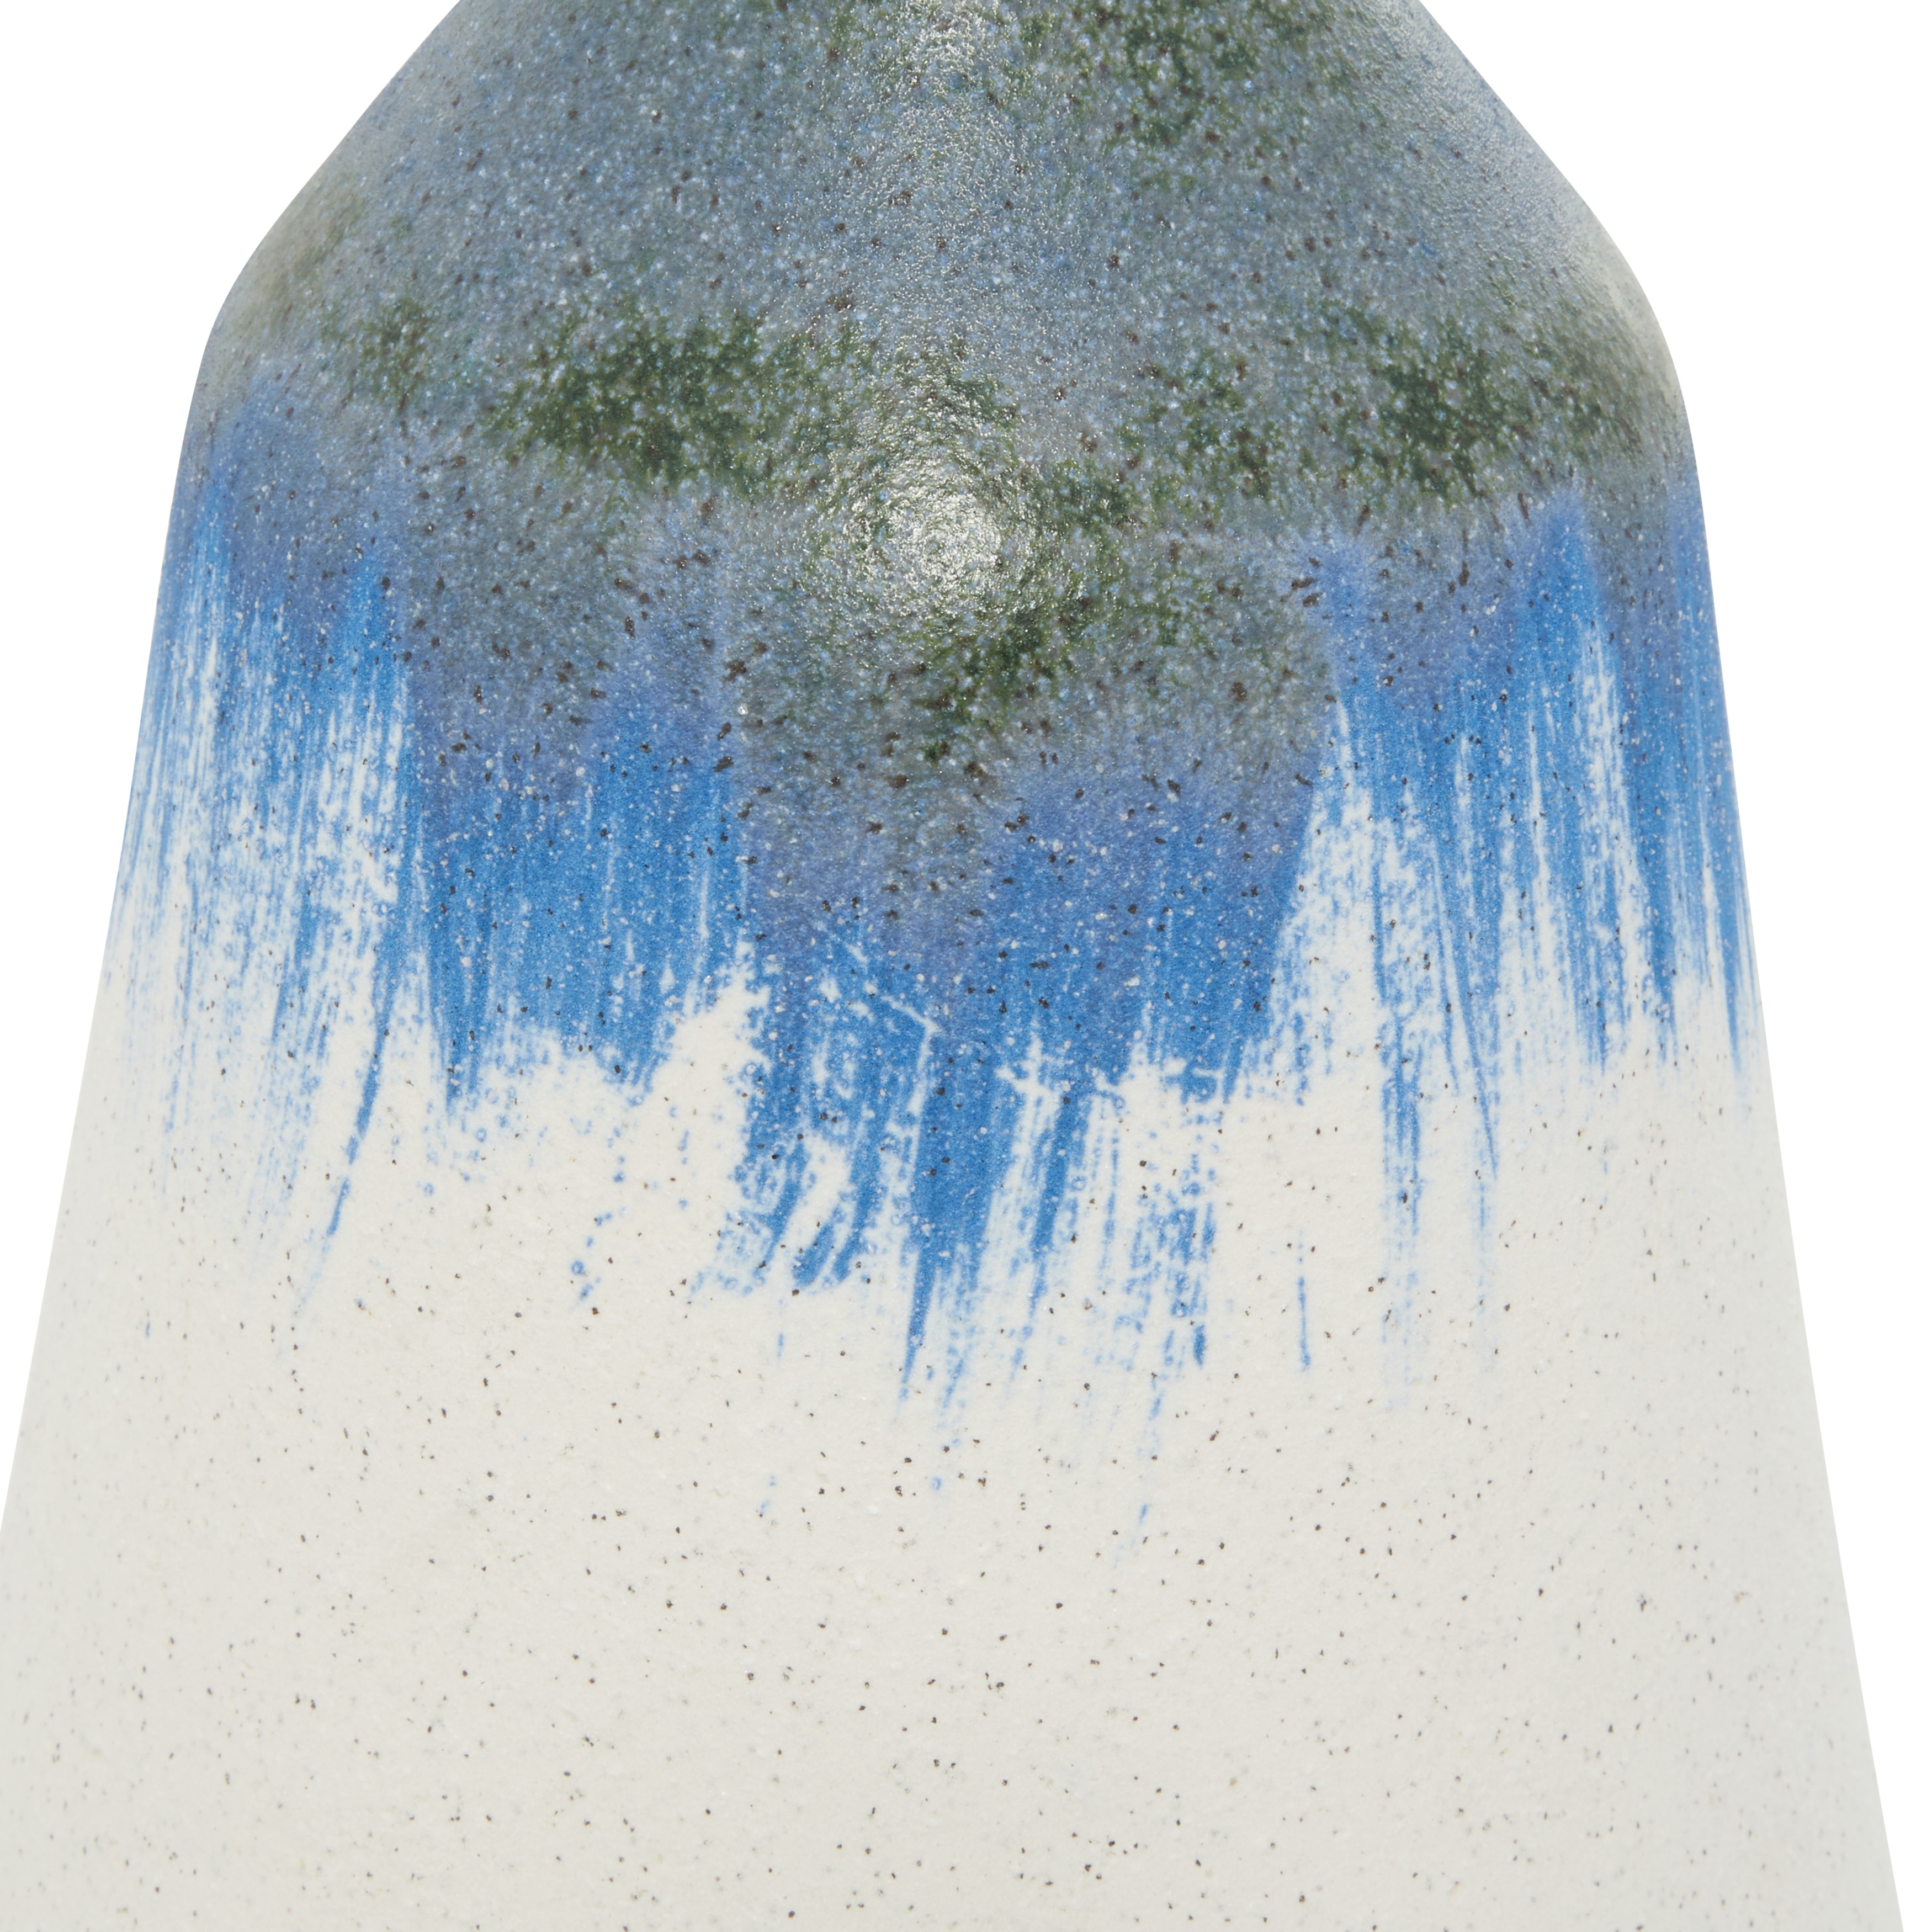 The Novogratz White Ceramic Handmade Vase with Dripping Effect